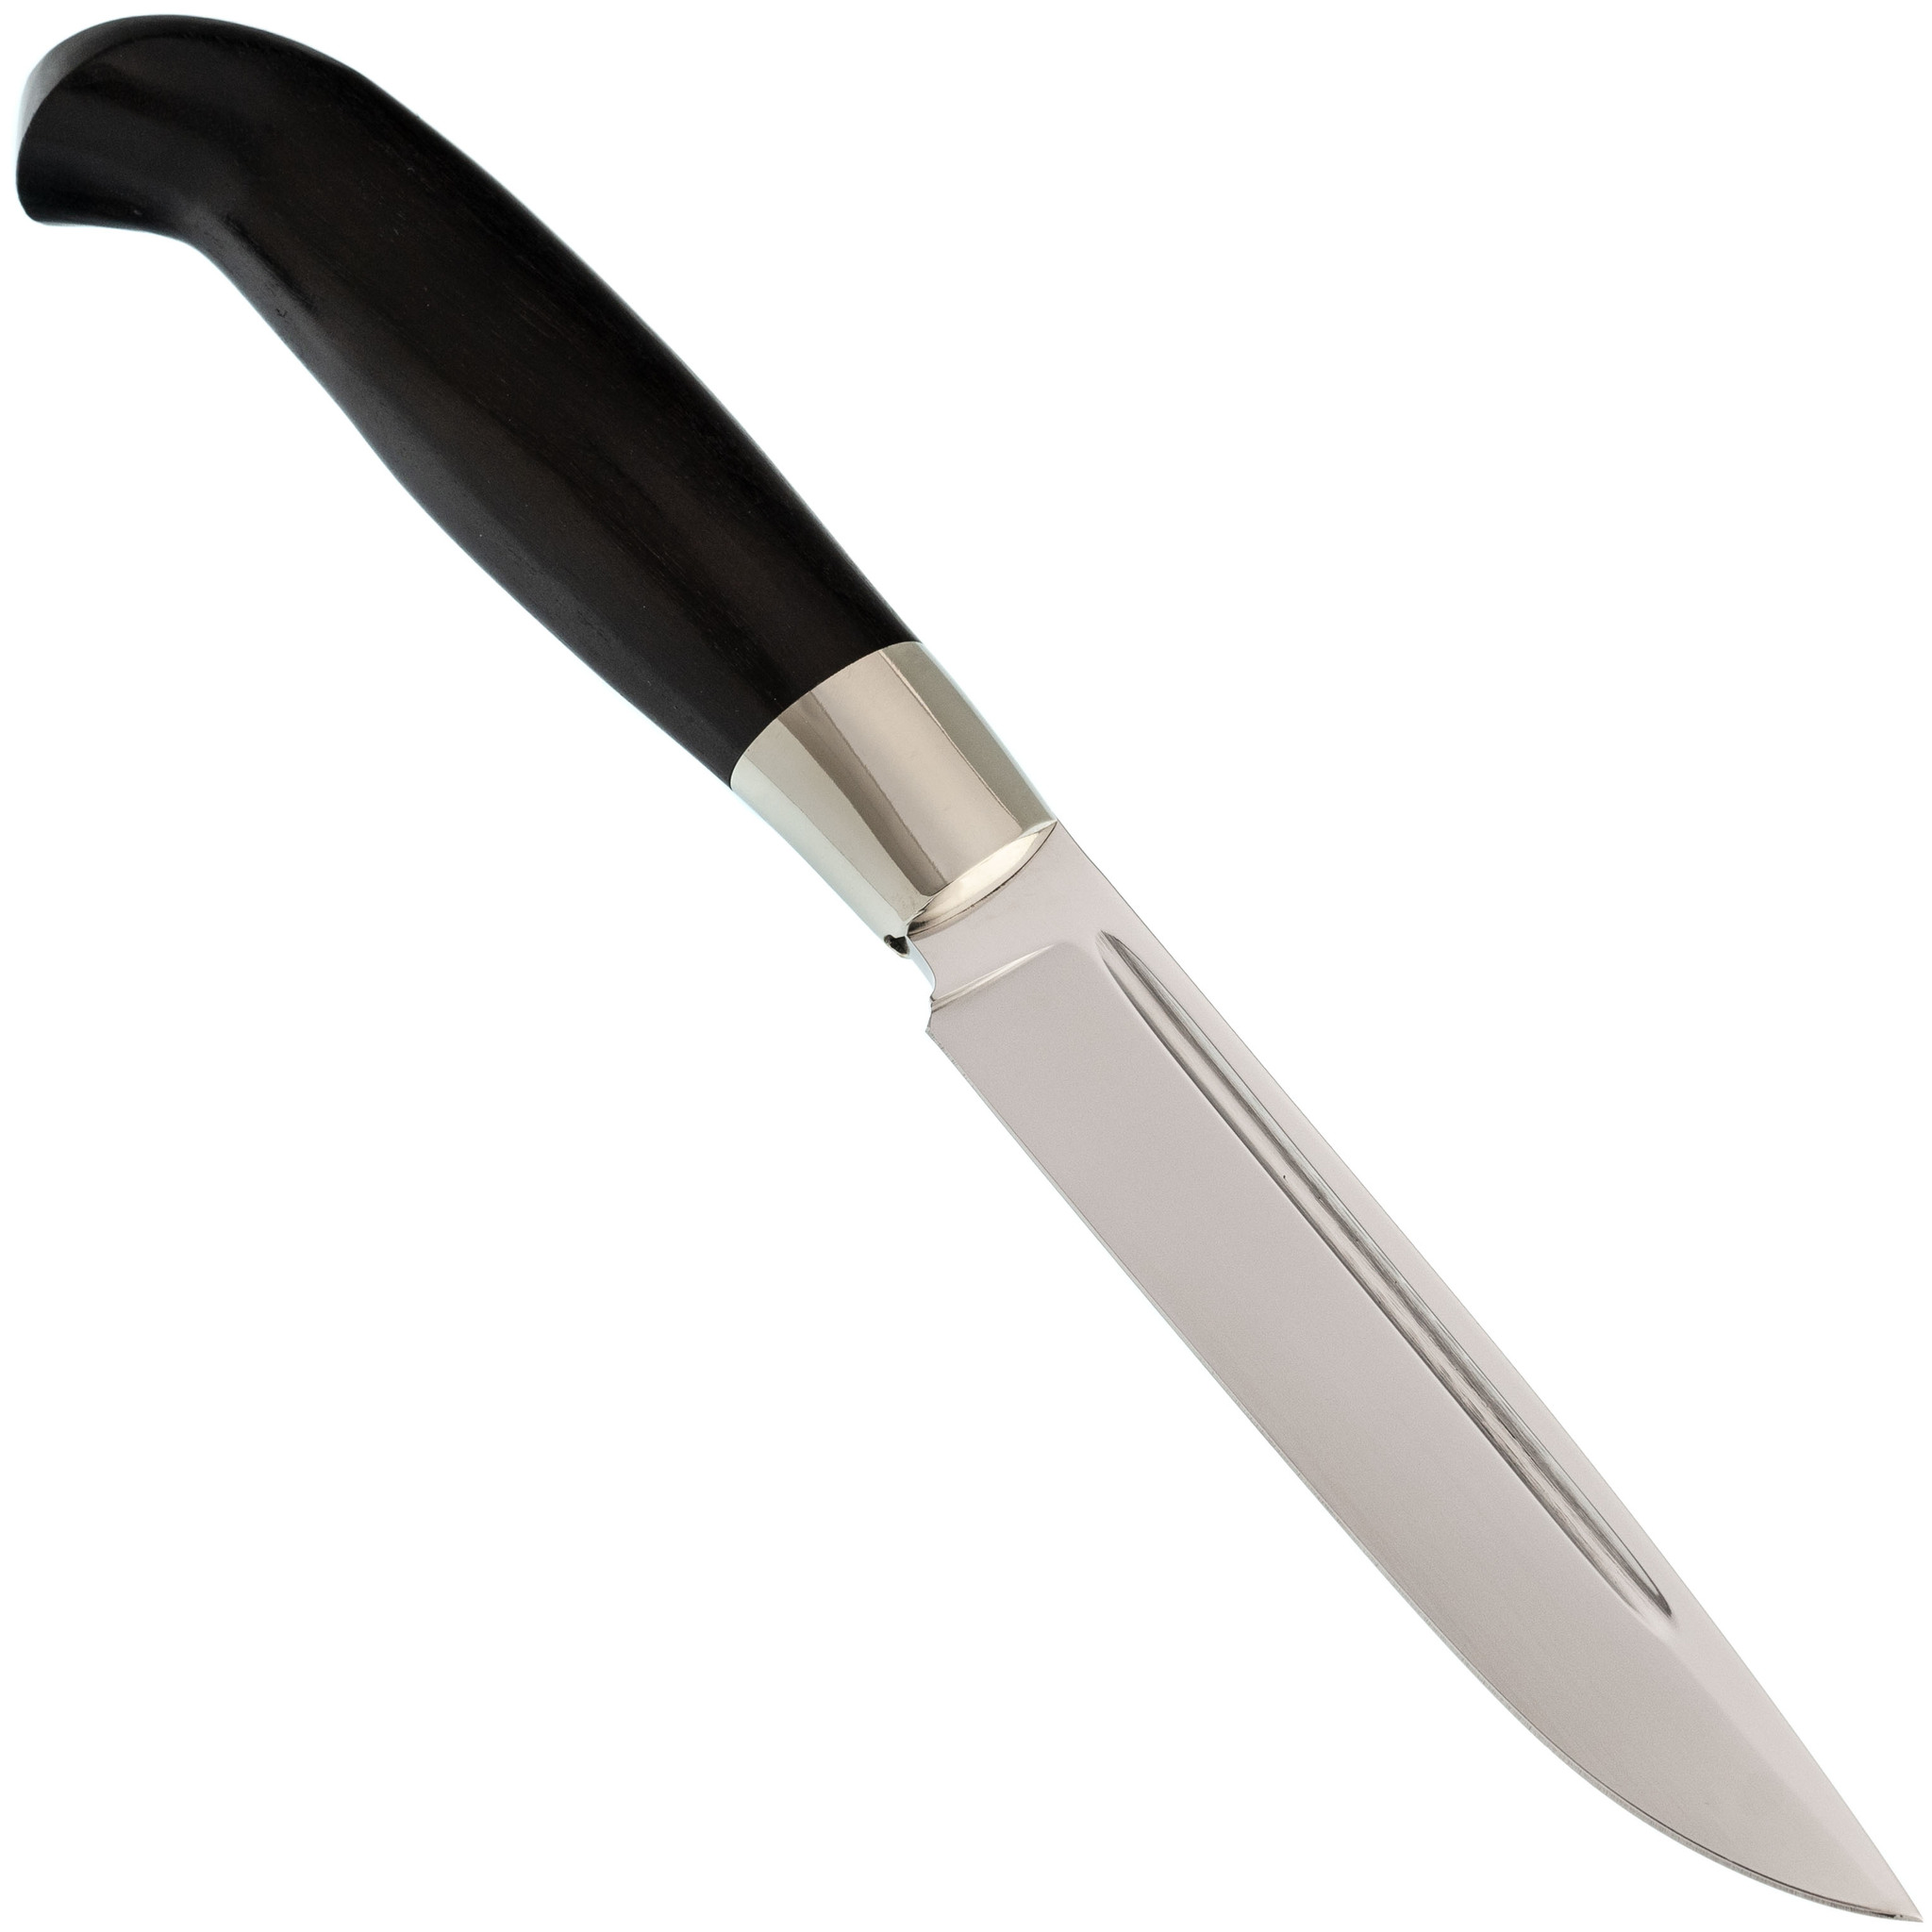 Нож Финка Классика, сталь 65х13, граб, мельхиор нож клык граб сталь 110х18 м шд аир